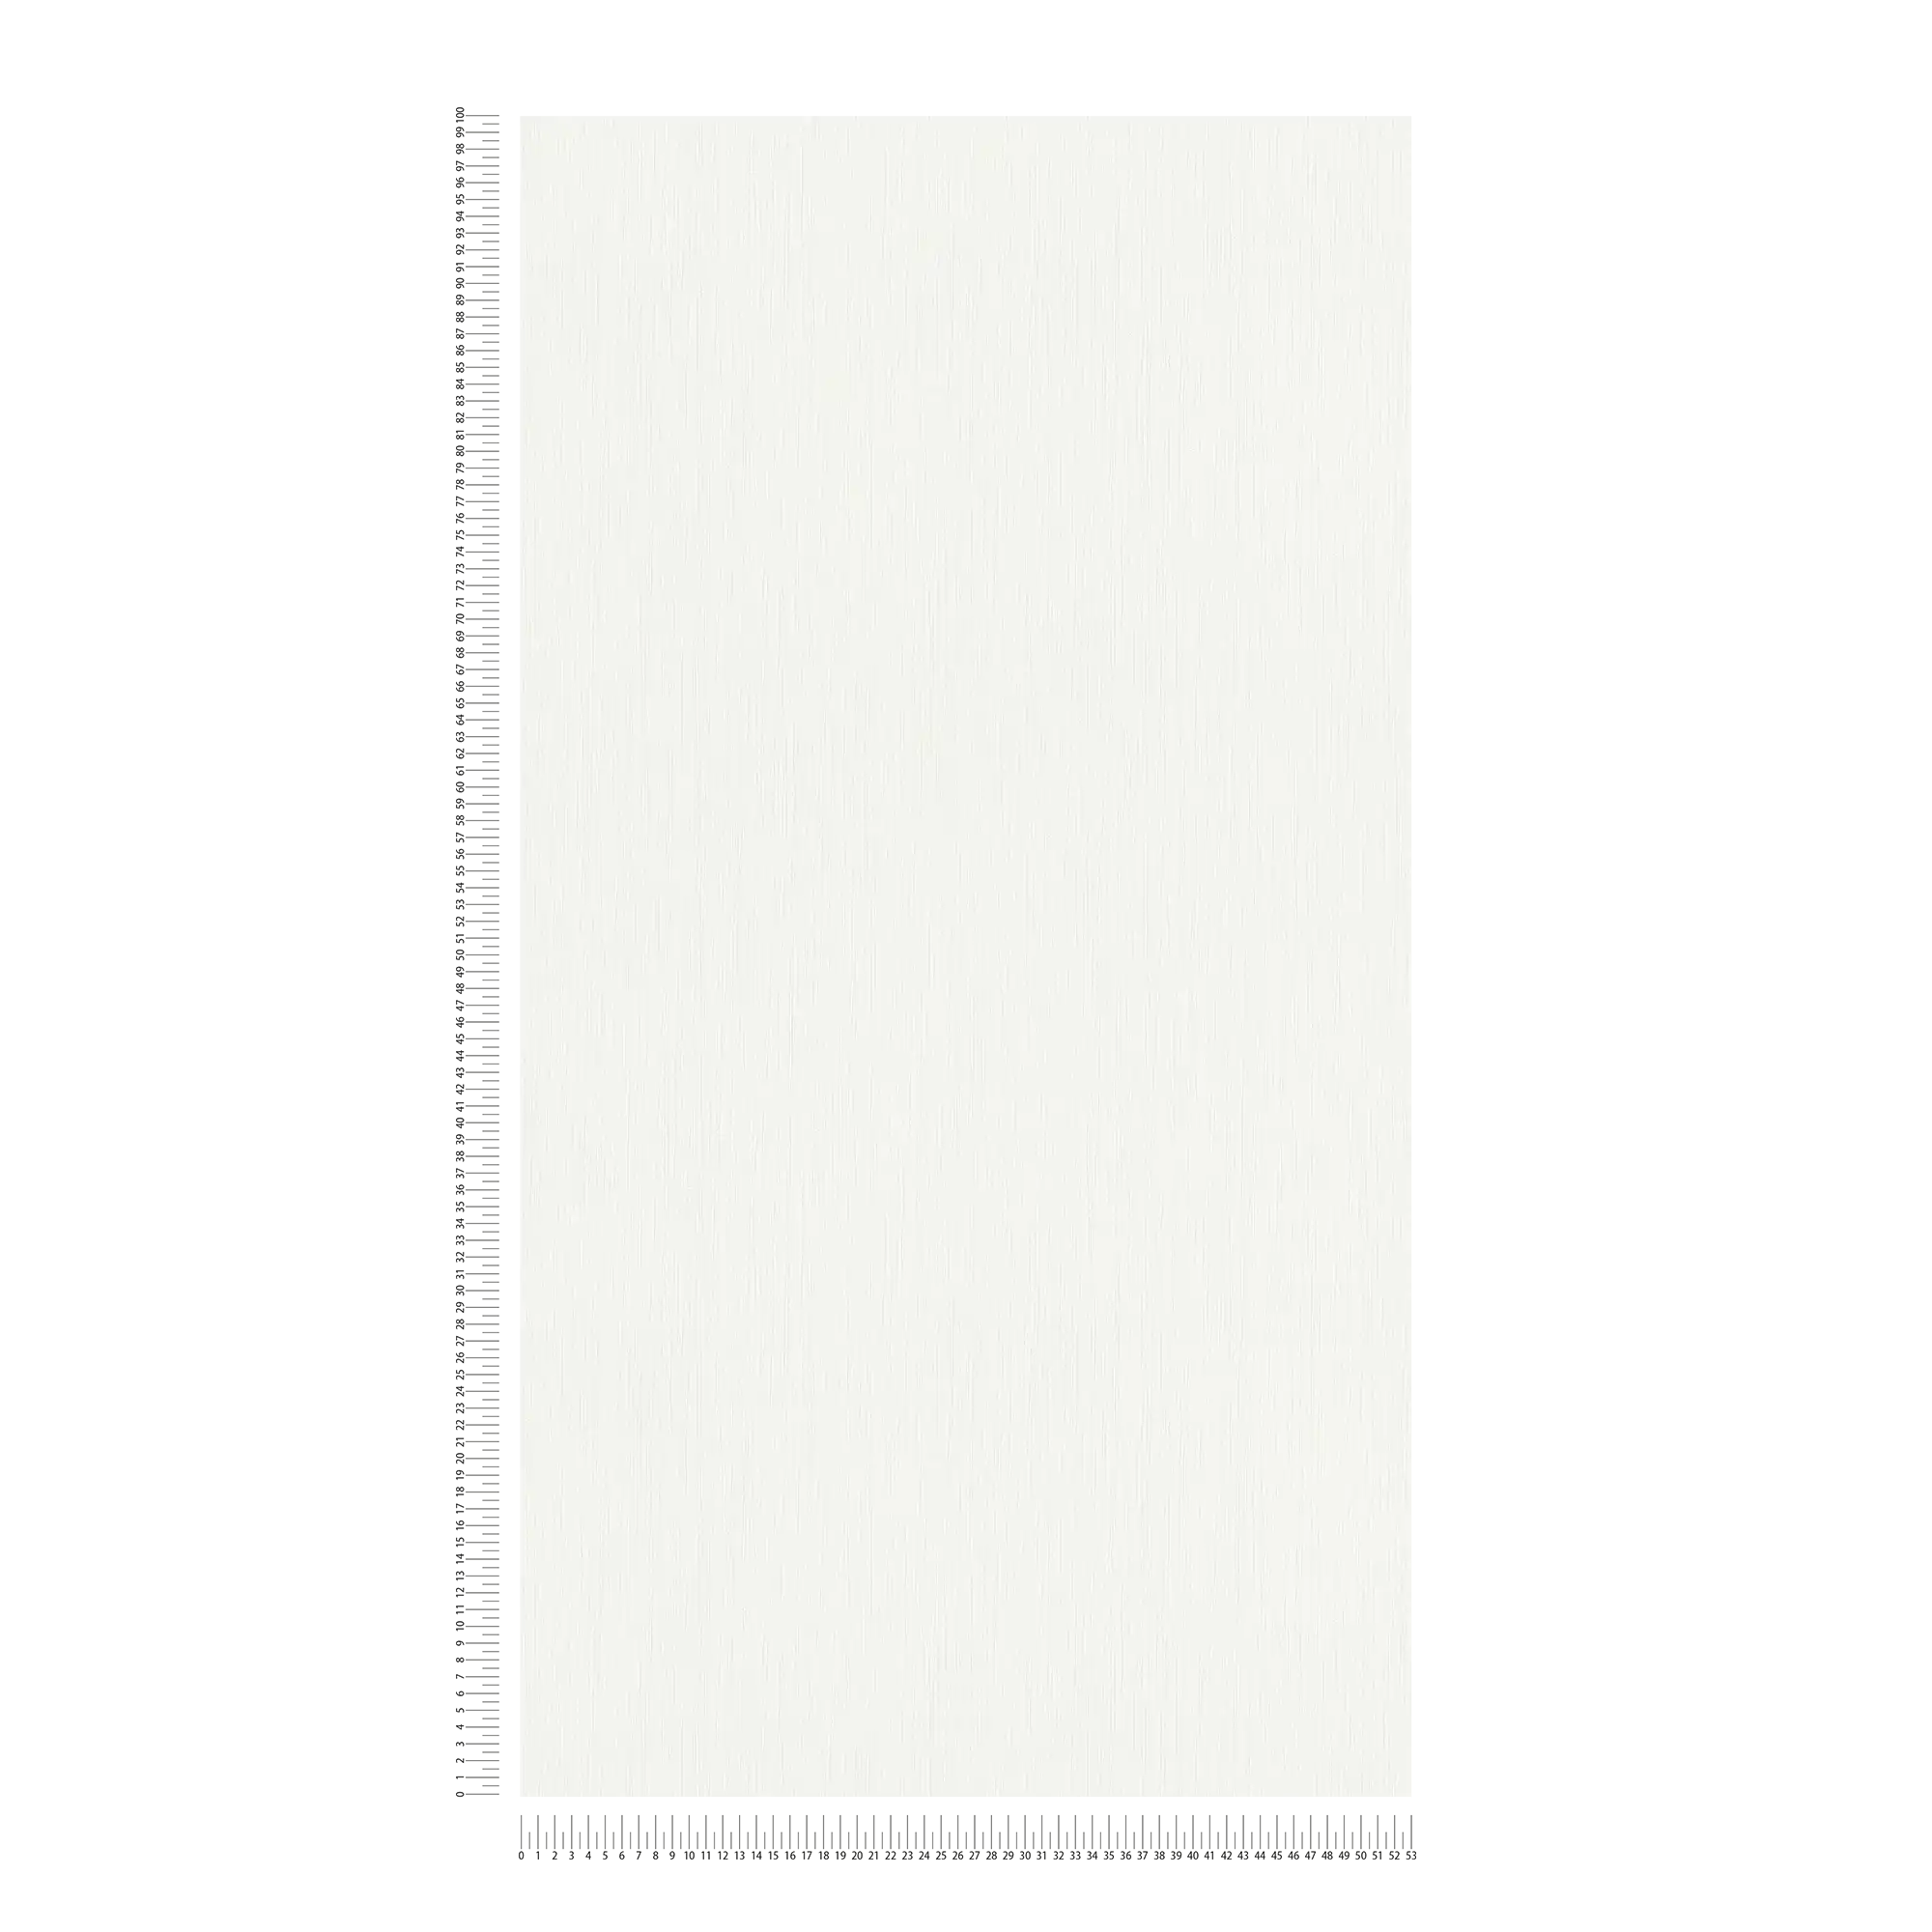             Carta da parati bianca lucida metallizzata e foderata con motivi strutturati
        